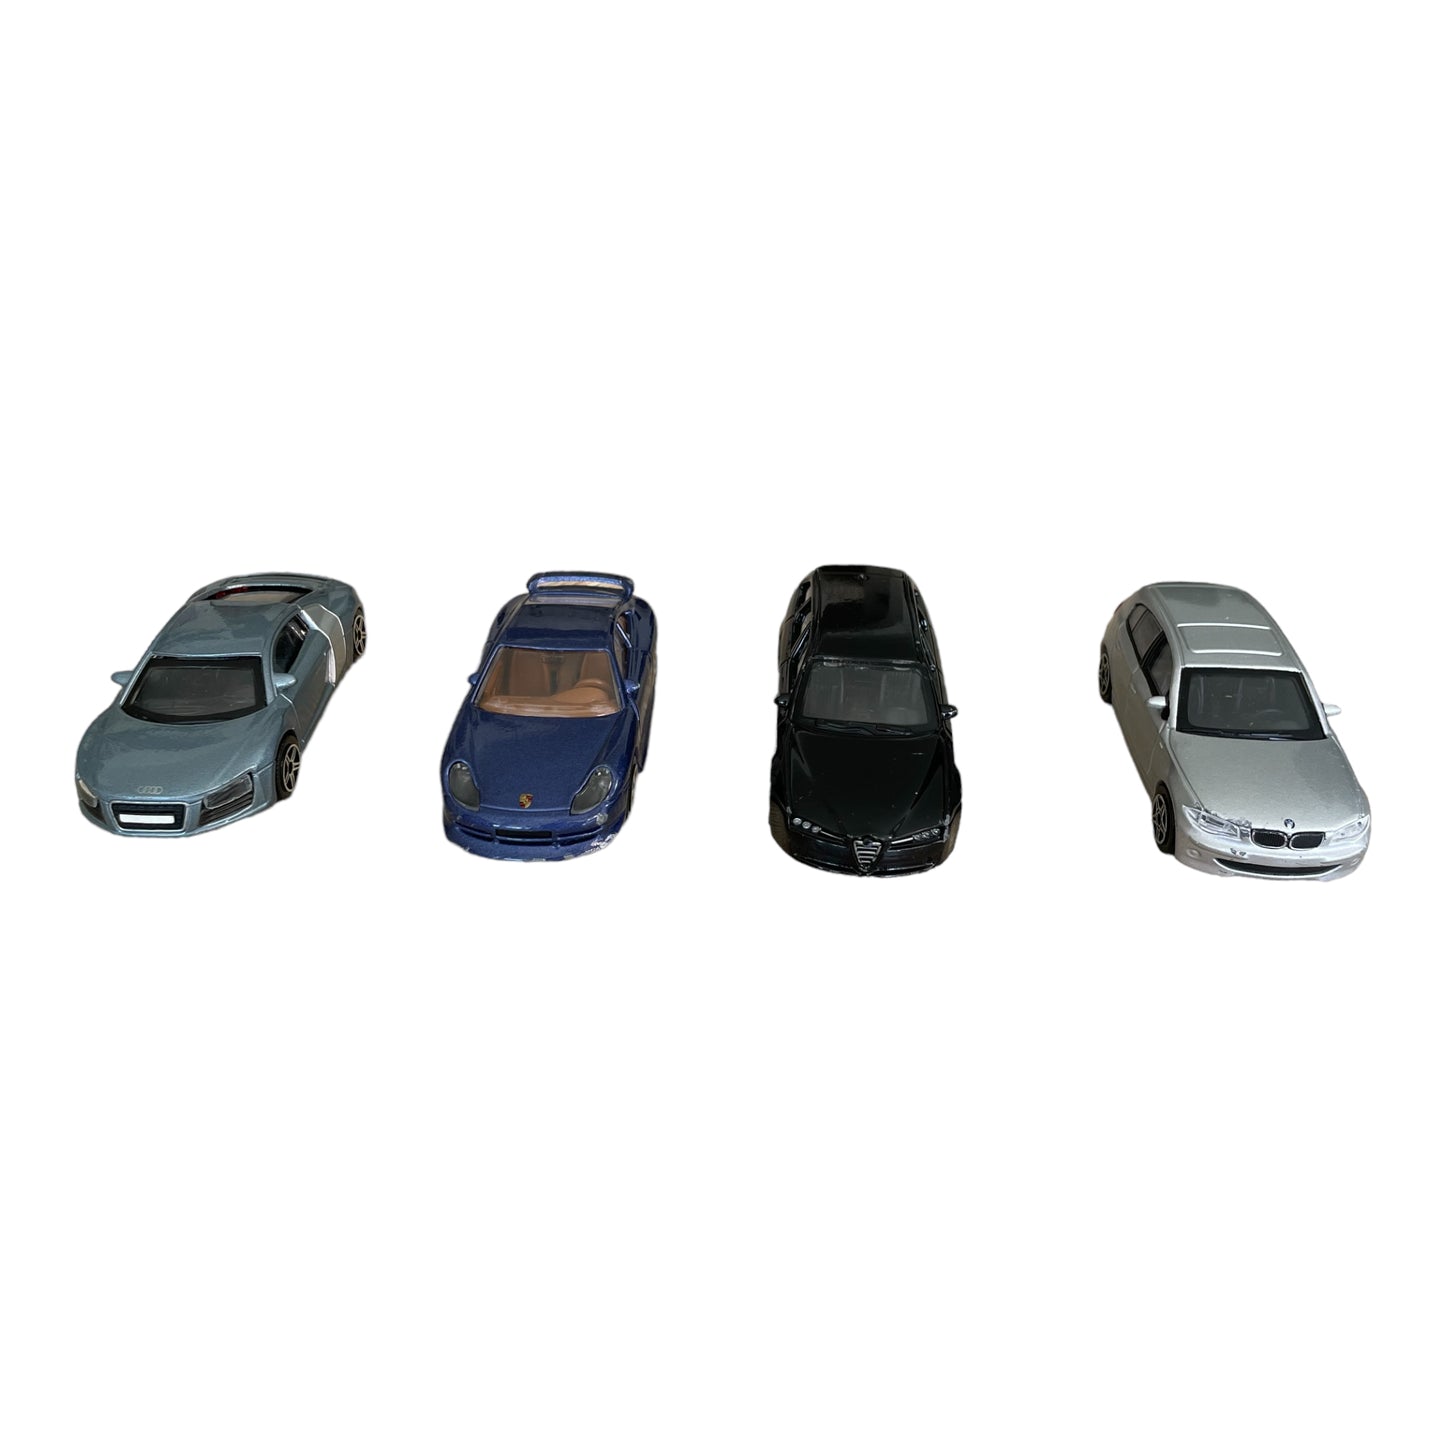 Set of 4 Burago Cars - BMW 1 Series, Audi R8, Alfa Romeo 159, Porsche Carrera 911 - Scale 1/43